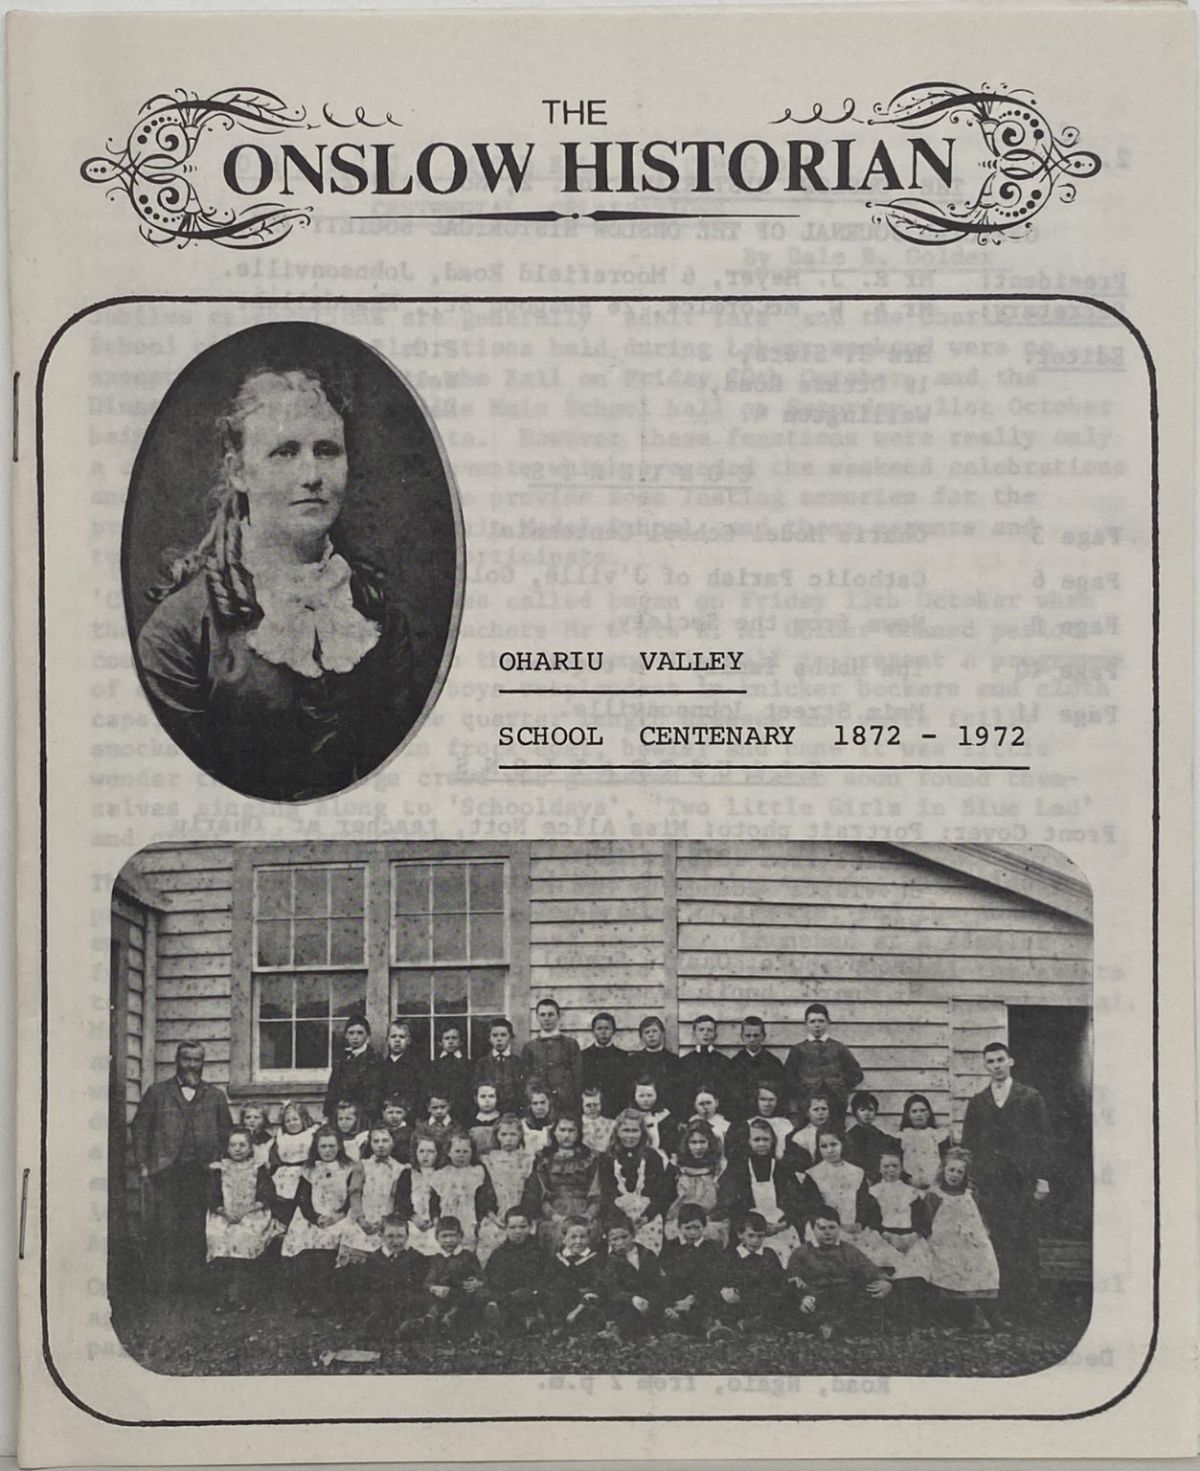 THE ONSLOW HISTORIAN: Vol. 2 - No. 4 1972 - Ohariu Valley School Centenary